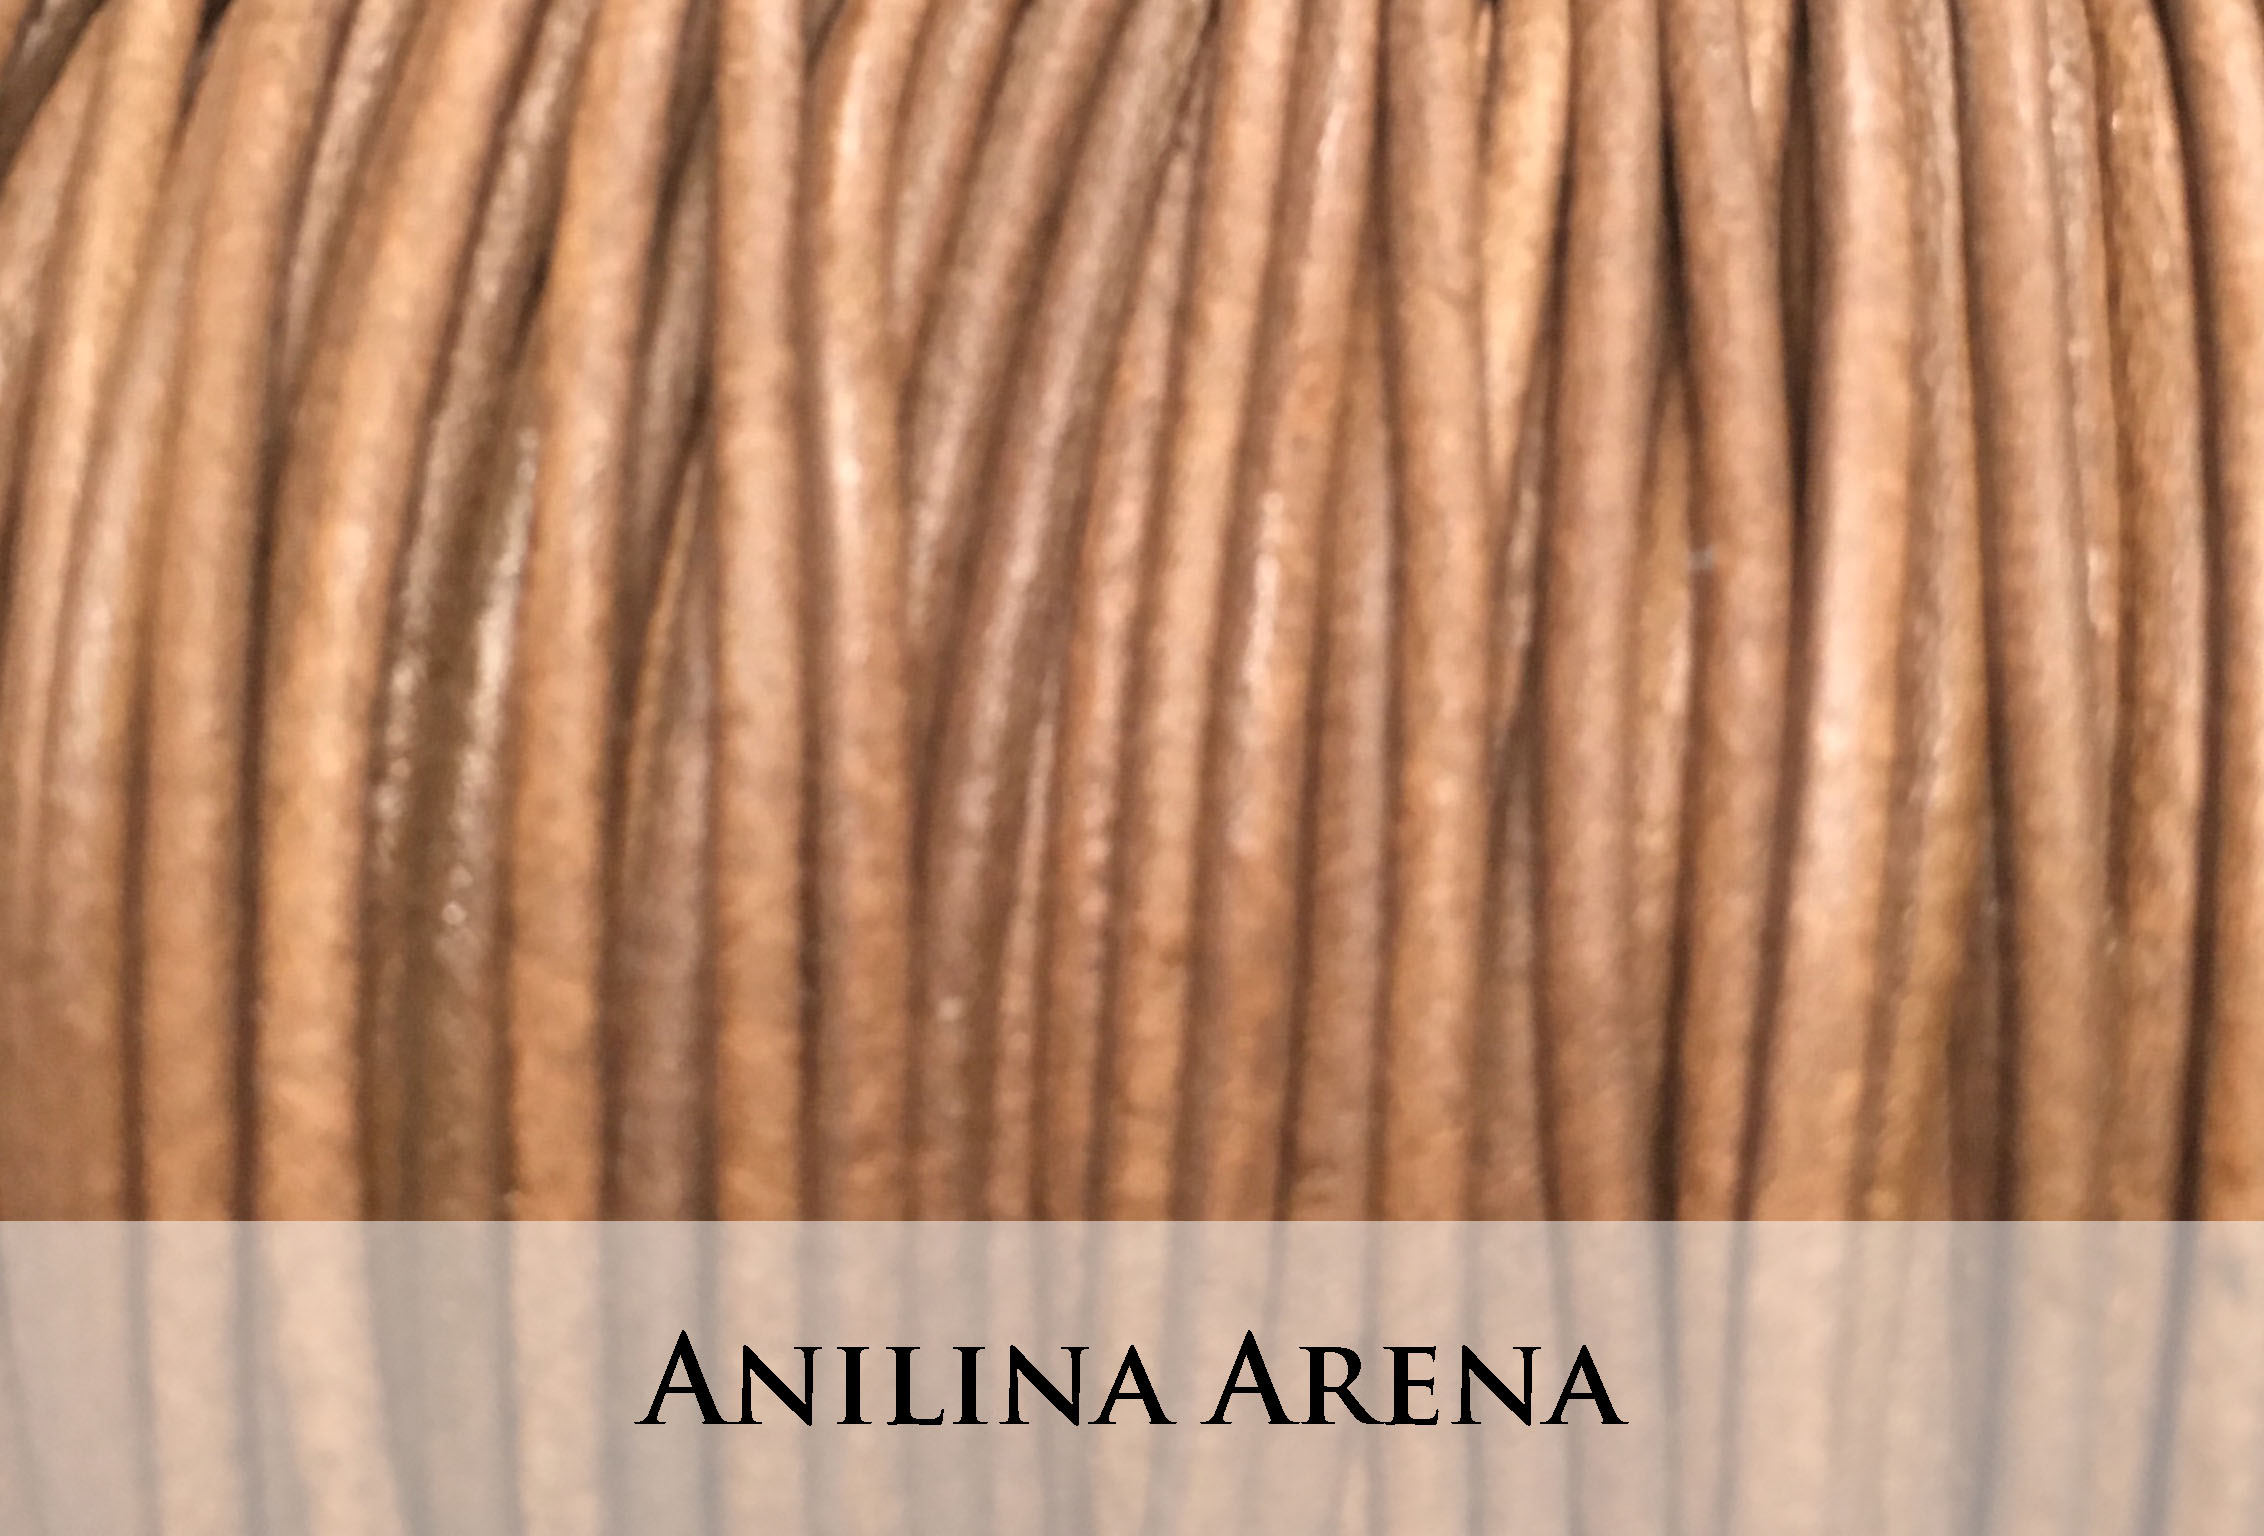 Anilina Arena